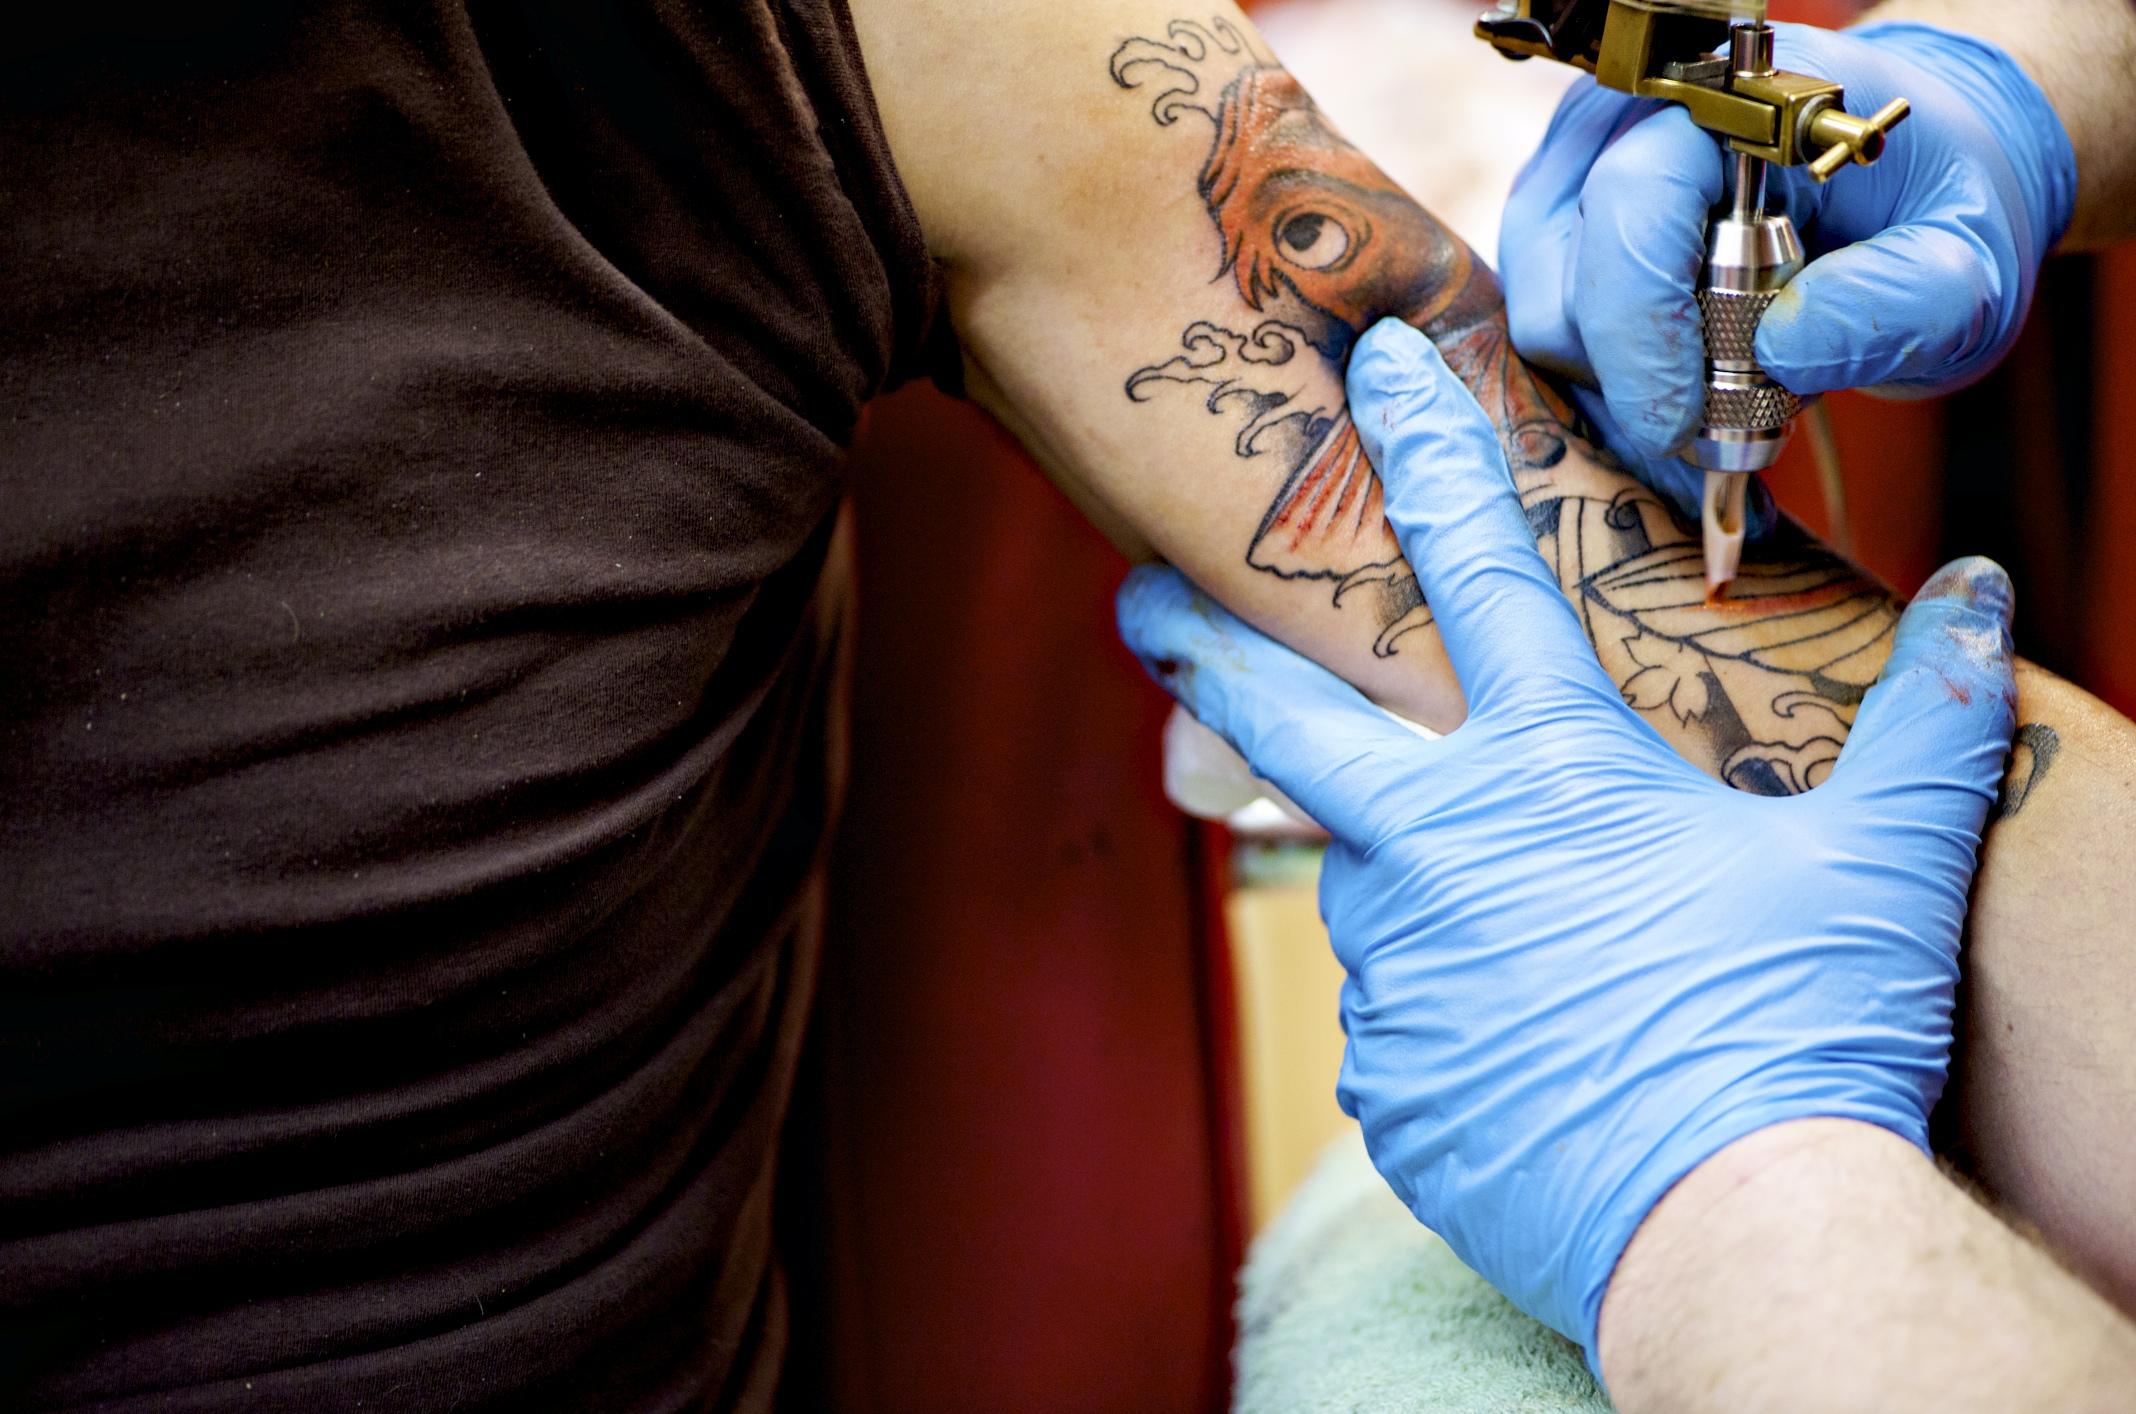 Tattoo over self harm scars